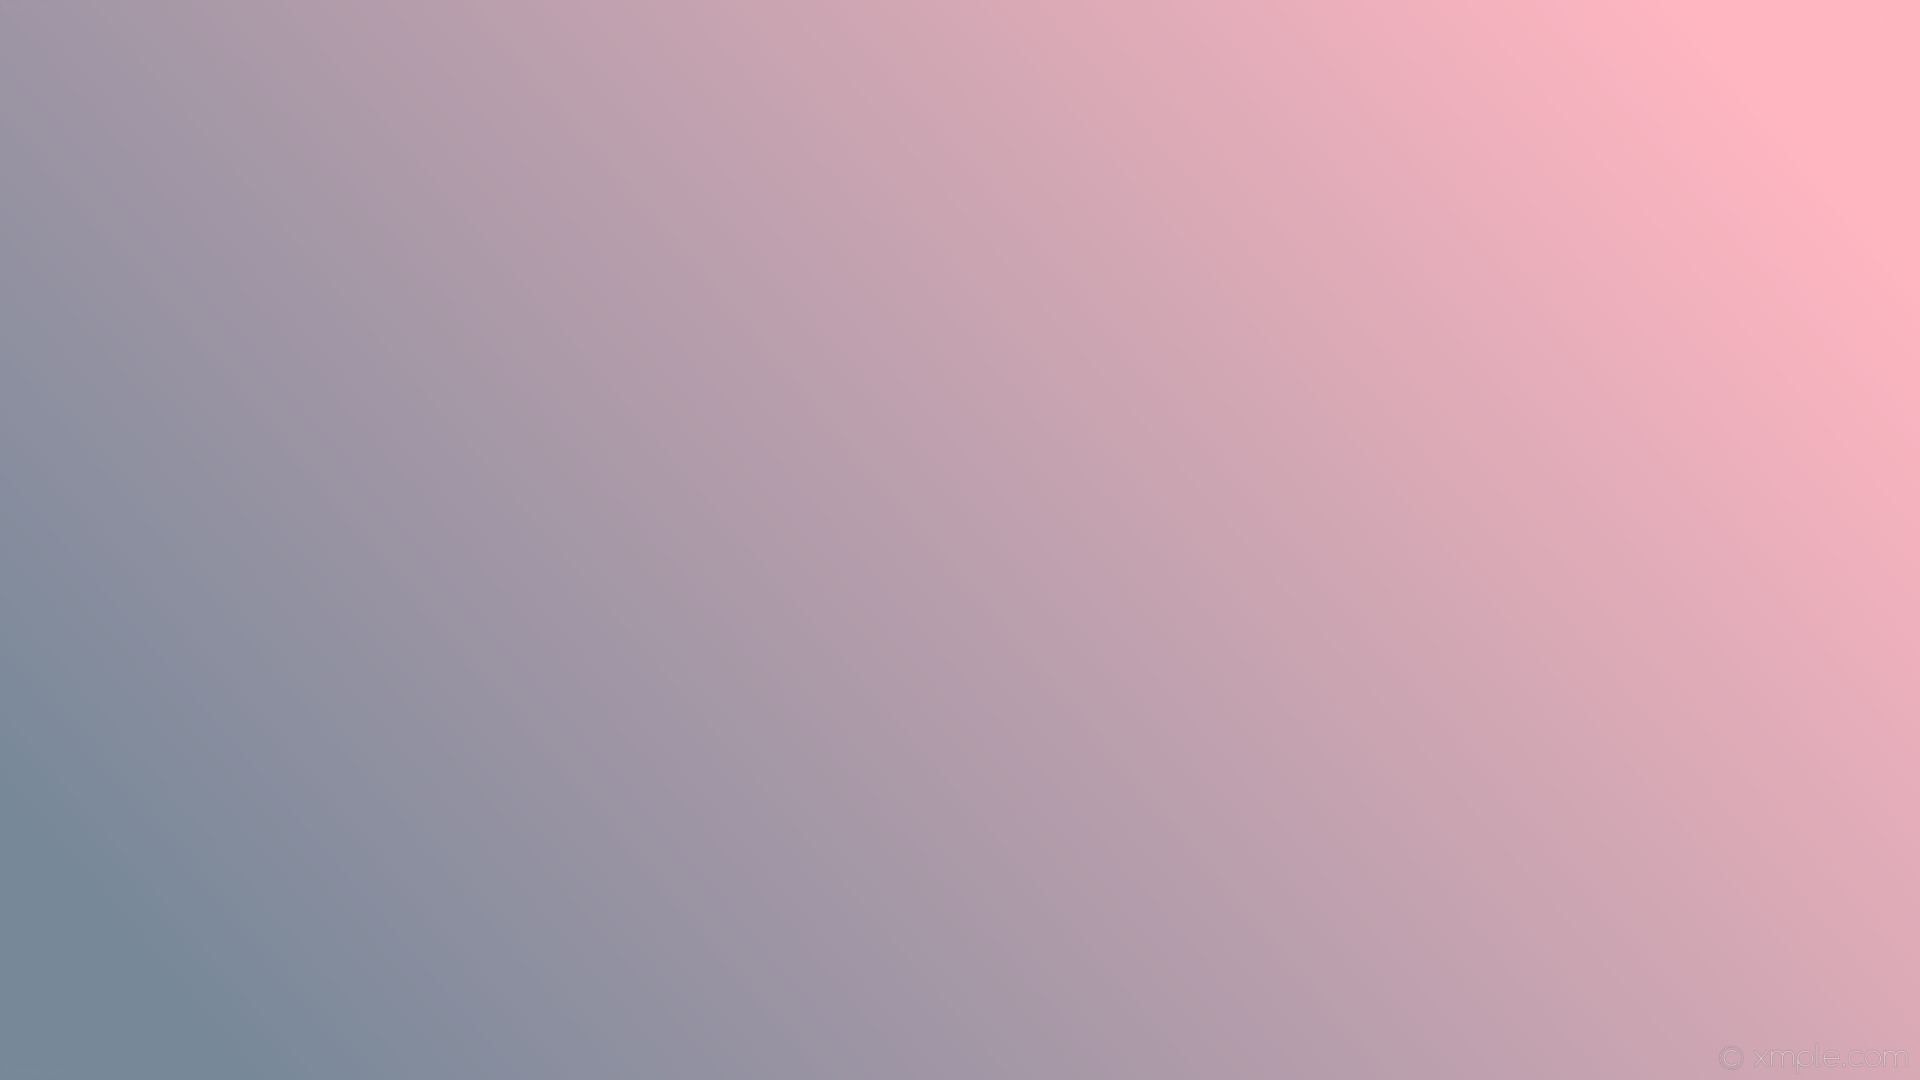 1920x1080 wallpaper grey pink gradient linear light pink light slate gray #ffb6c1  #778899 15Â°